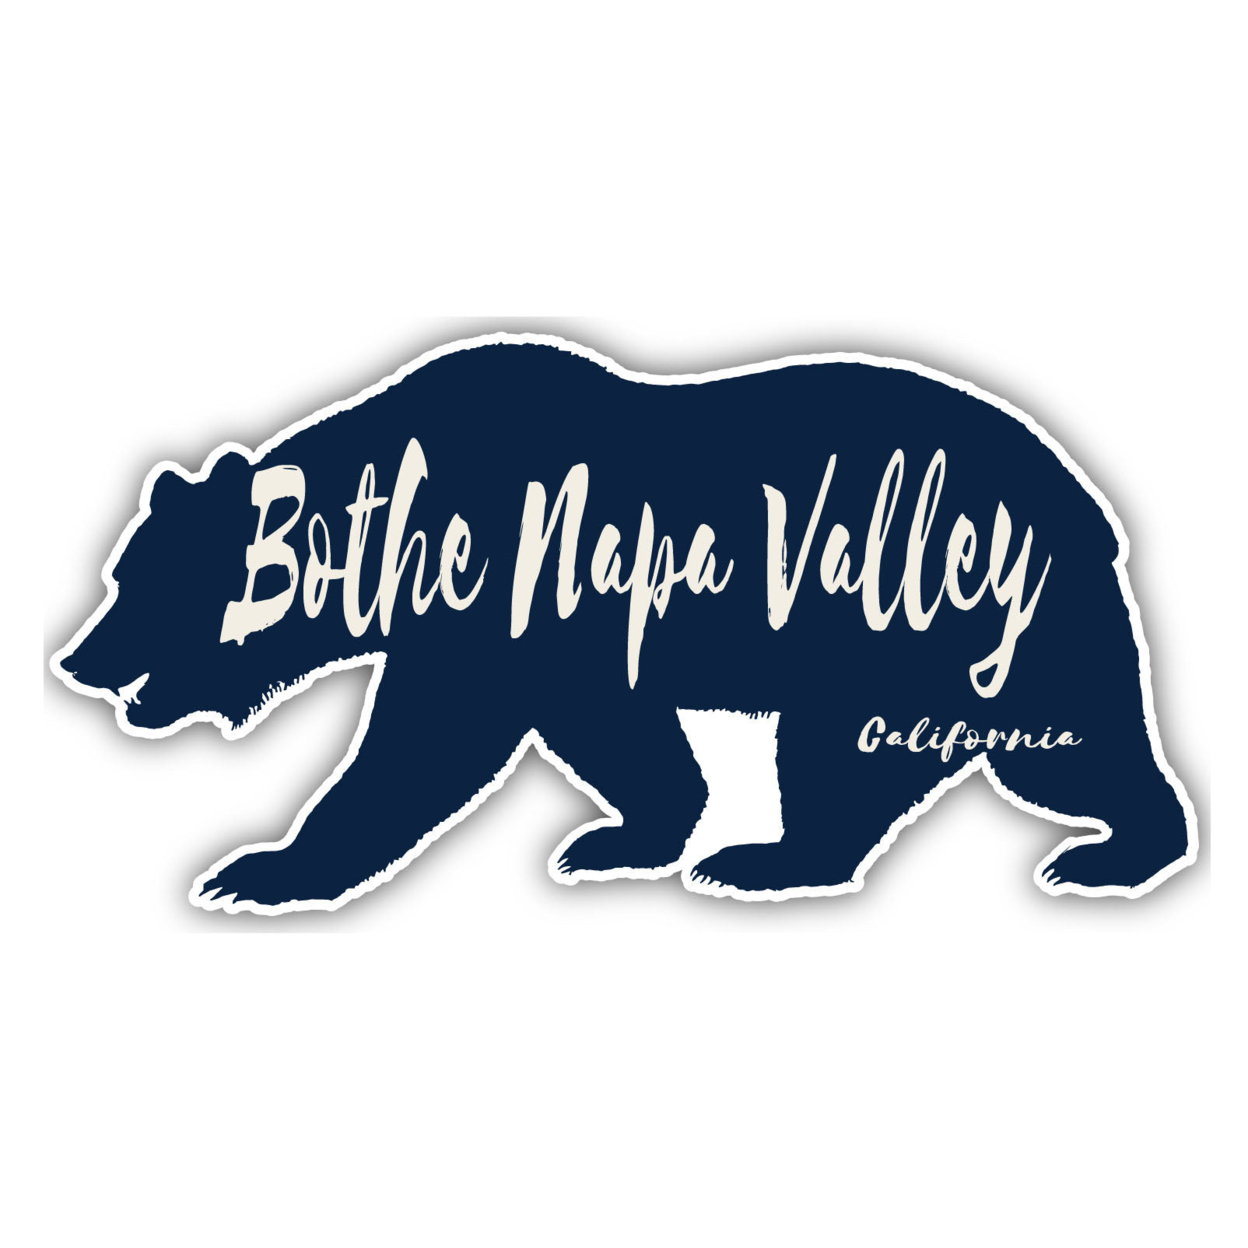 Bothe Napa Valley California Souvenir Decorative Stickers (Choose Theme And Size) - Single Unit, 4-Inch, Bear